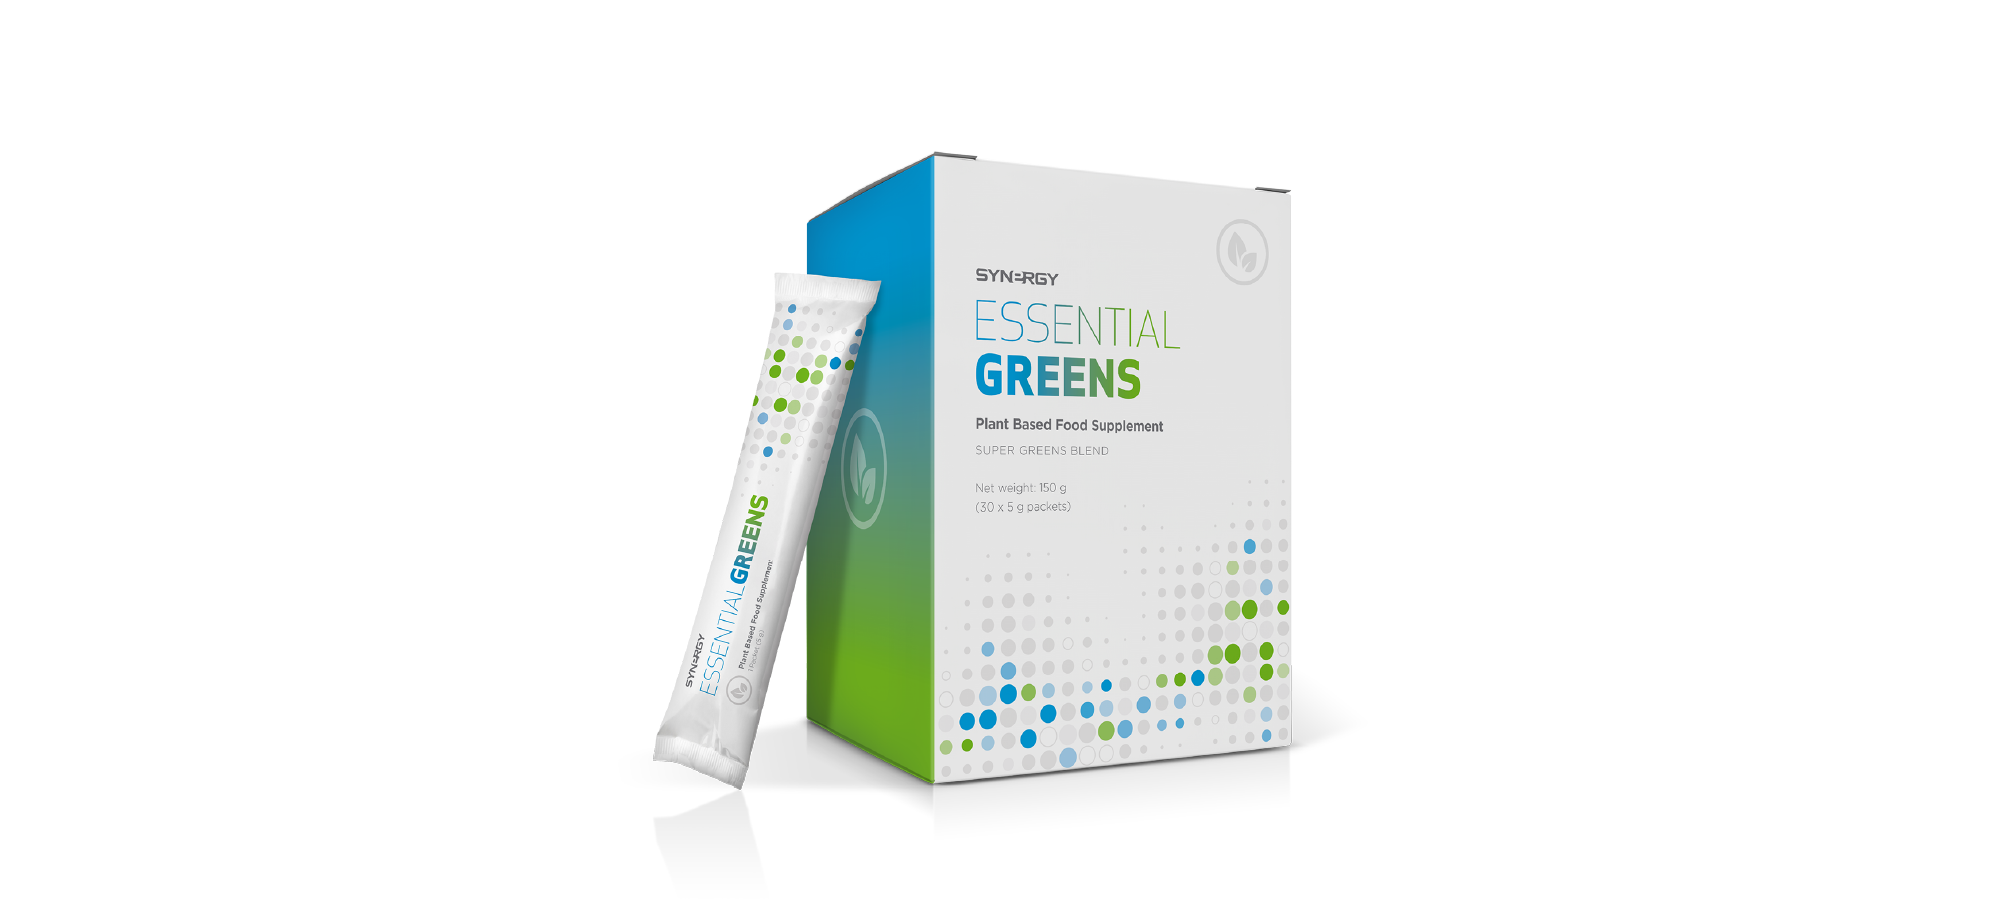 Essential greens supplement